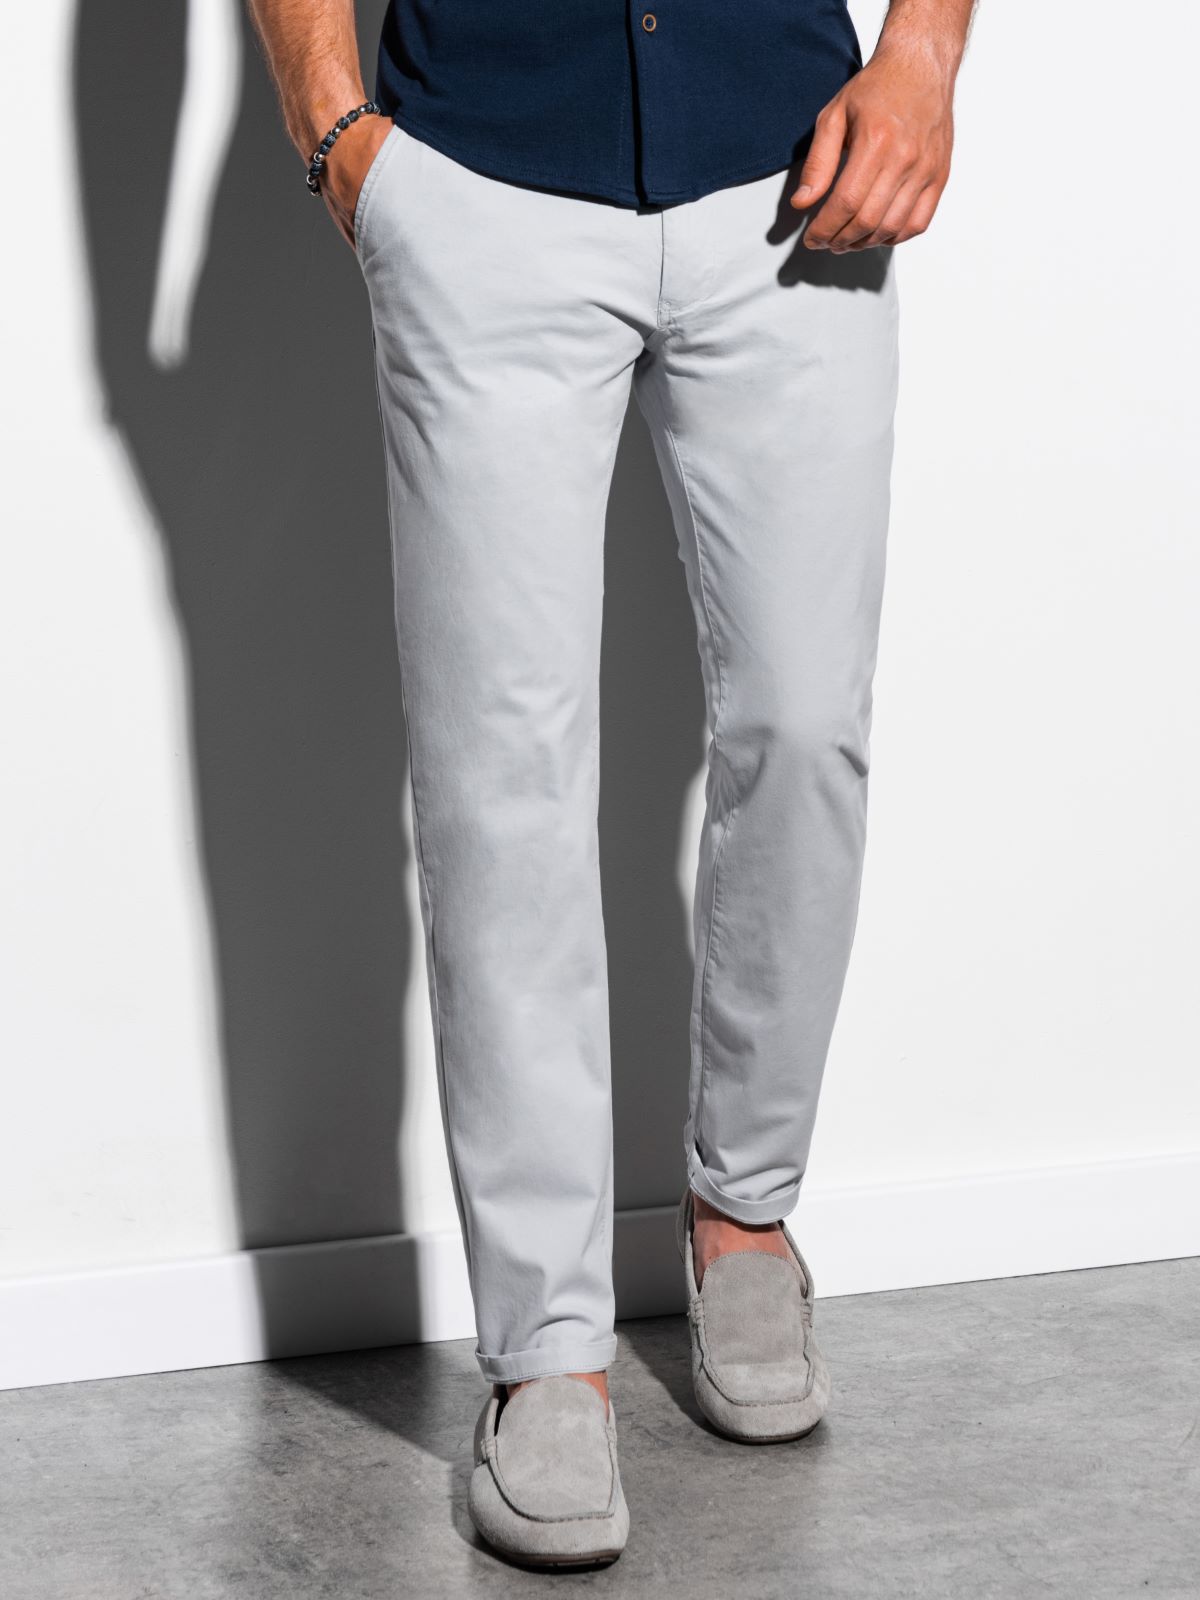 Men's pants chinos P894 - light grey ...